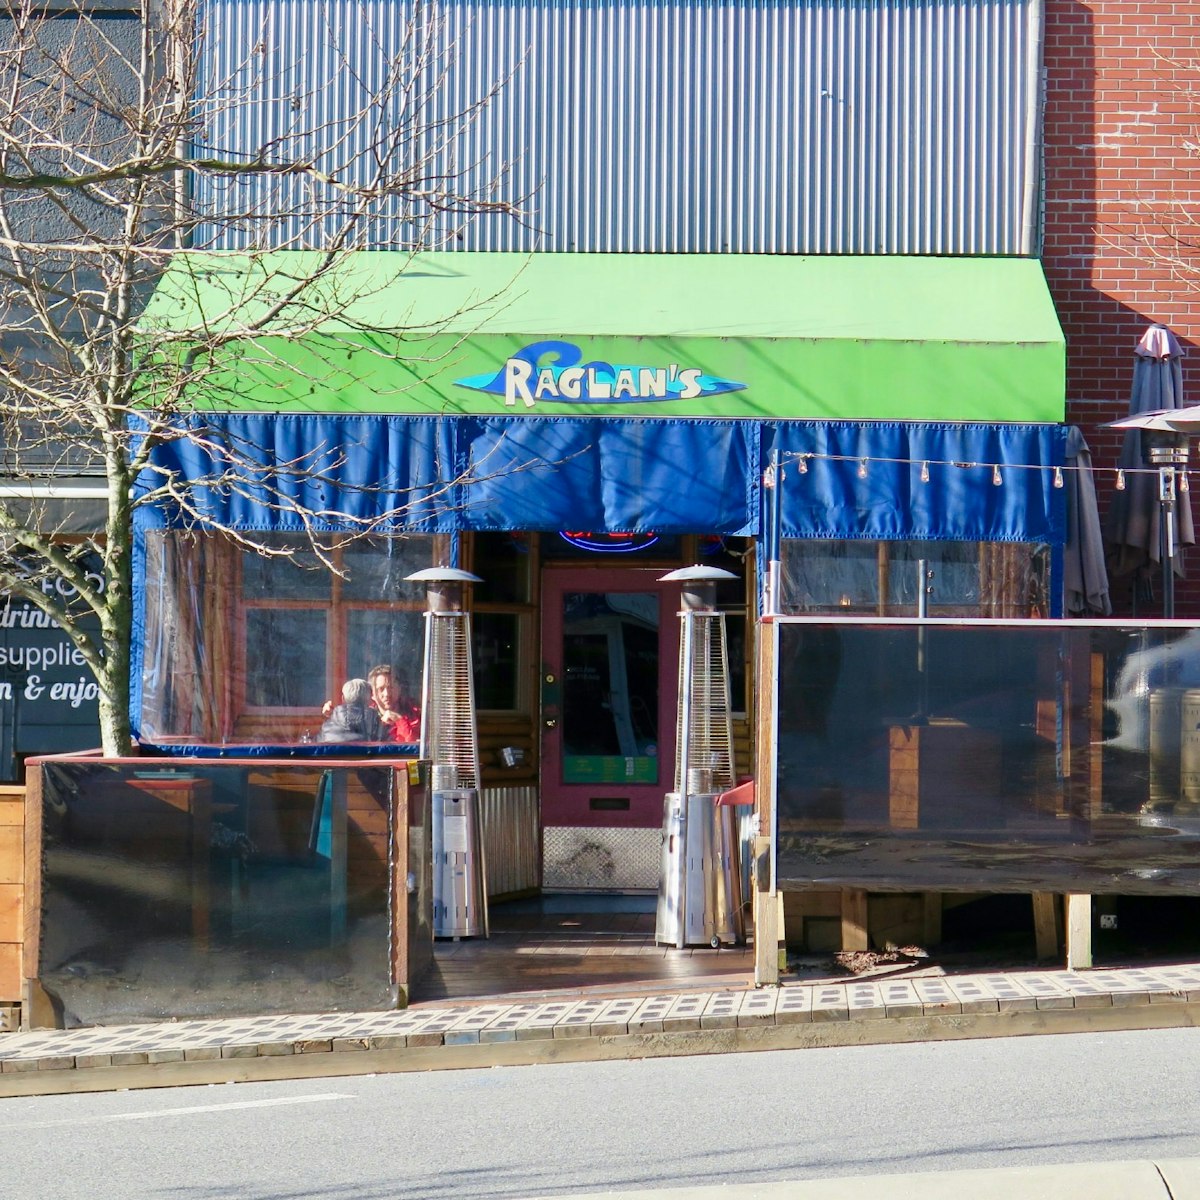 Exterior of Raglan's restaurant